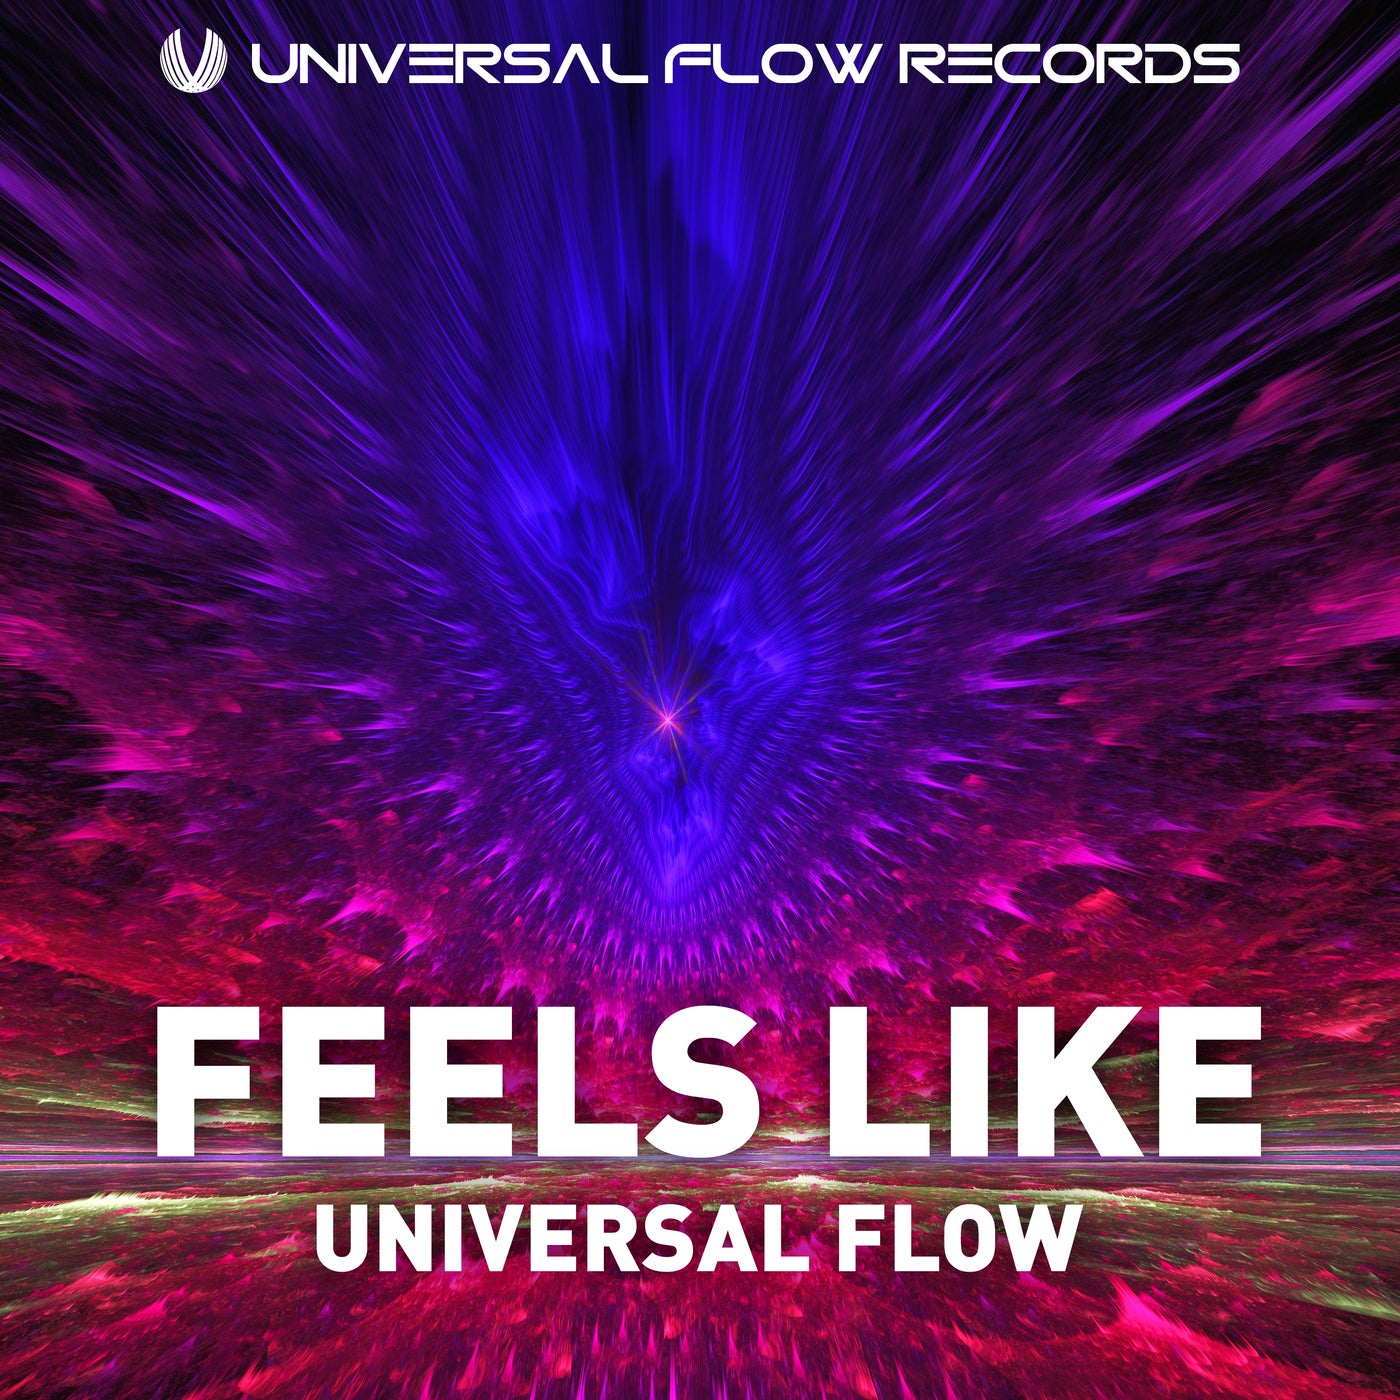 Feeling flow. Universal Flow. Universal Flo.